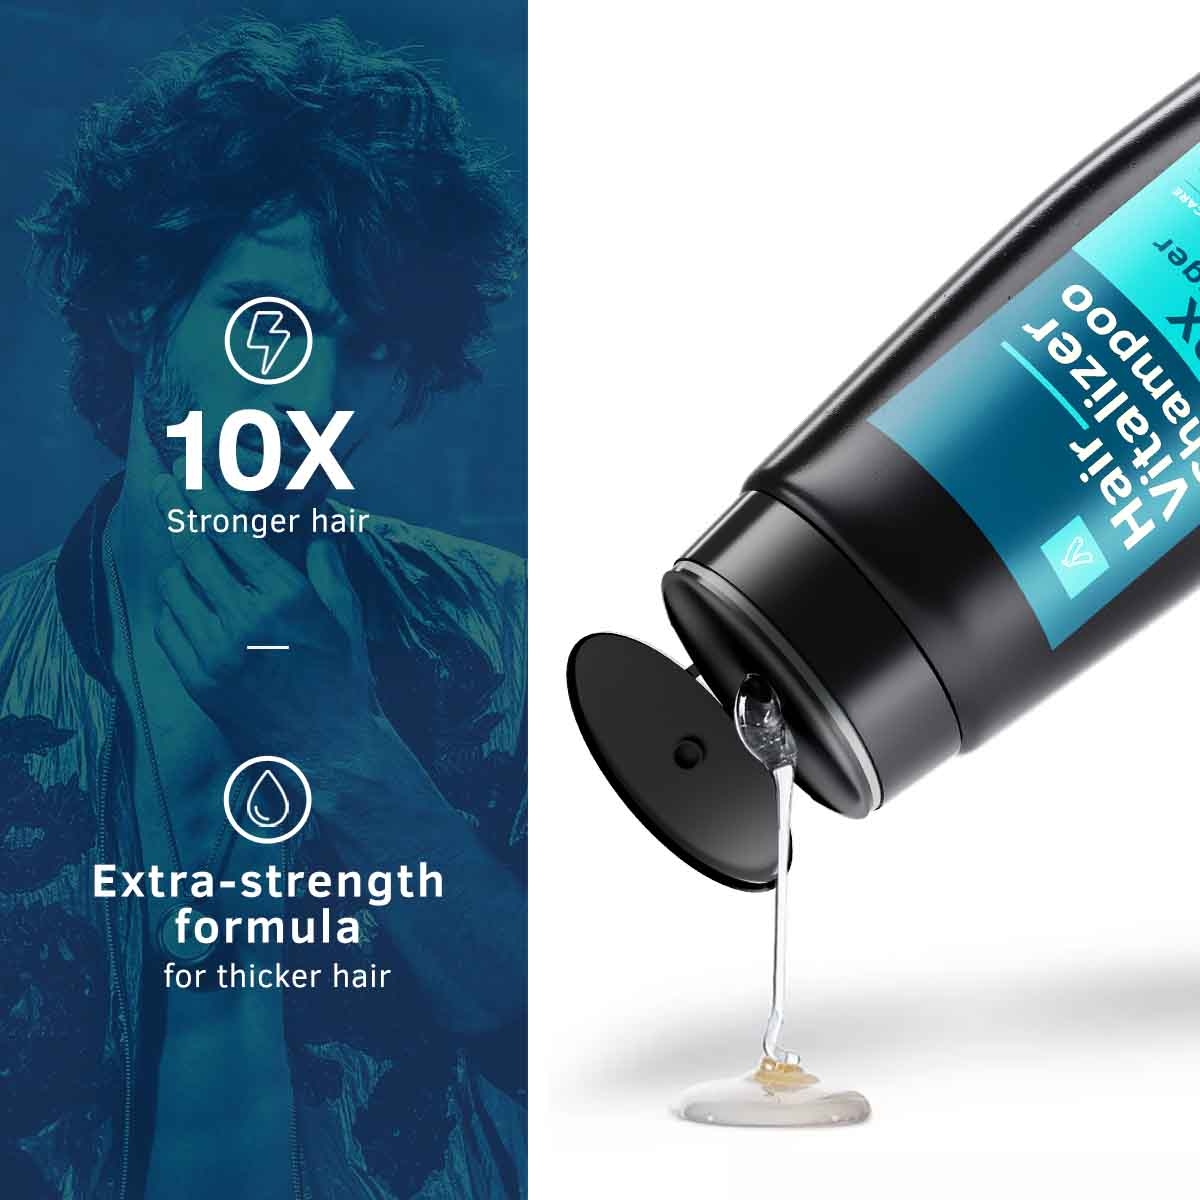 Ustraa Hair Vitalizer Shampoo - 250ml & Night Cream - De Tan And Anti Aging - 50g